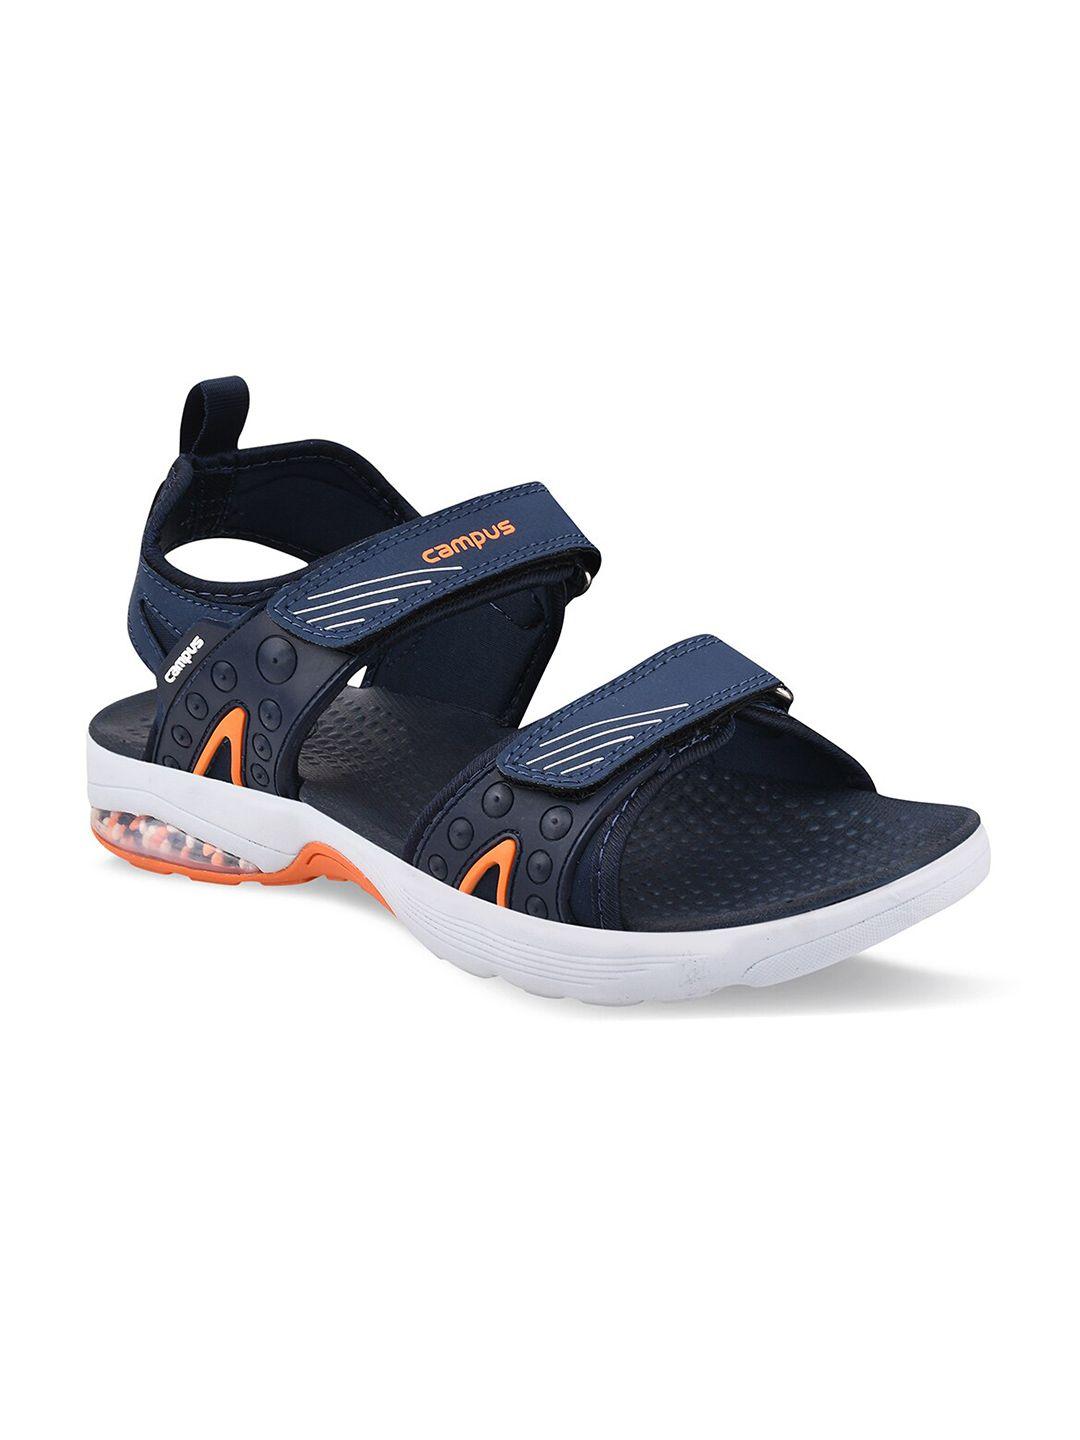 campus men navy blue & white comfort sports sandals